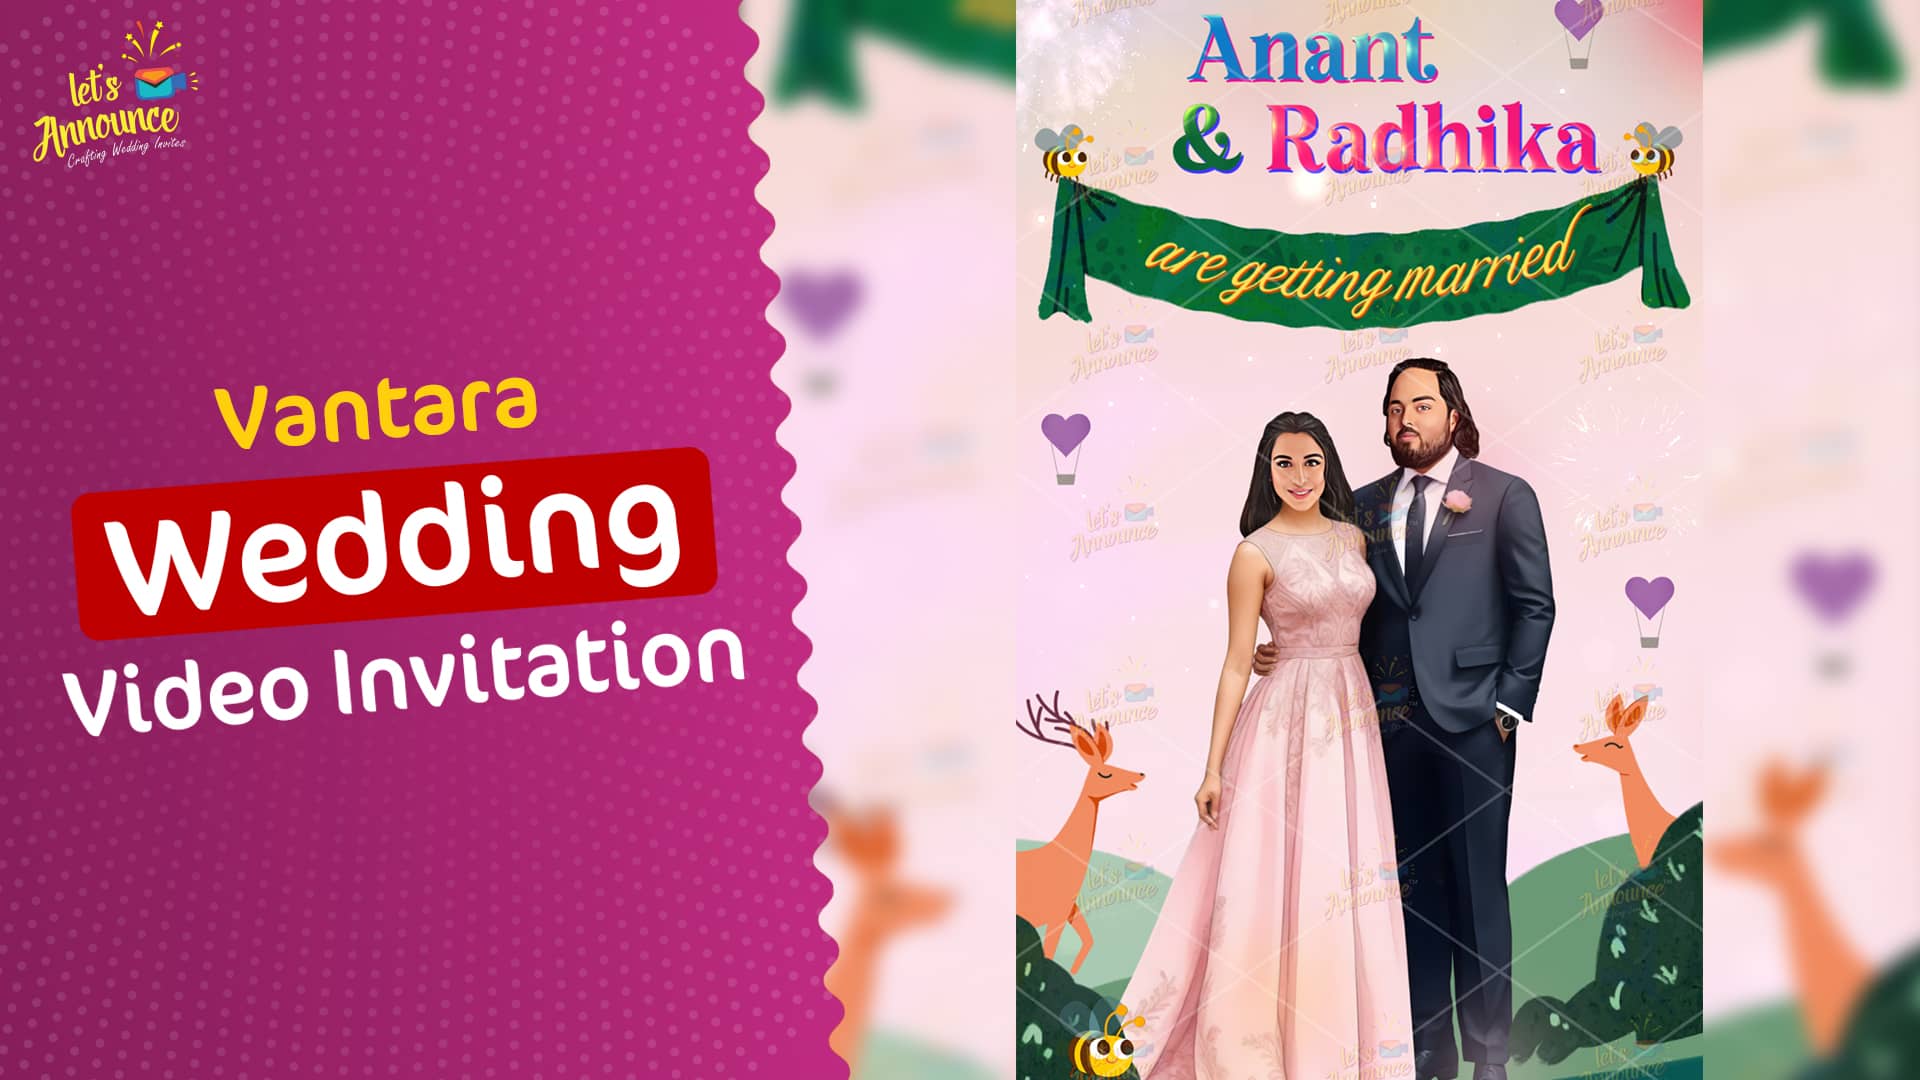 Vantara Ambani Wedding Invitation vertical - 90 sec (USD 99$)